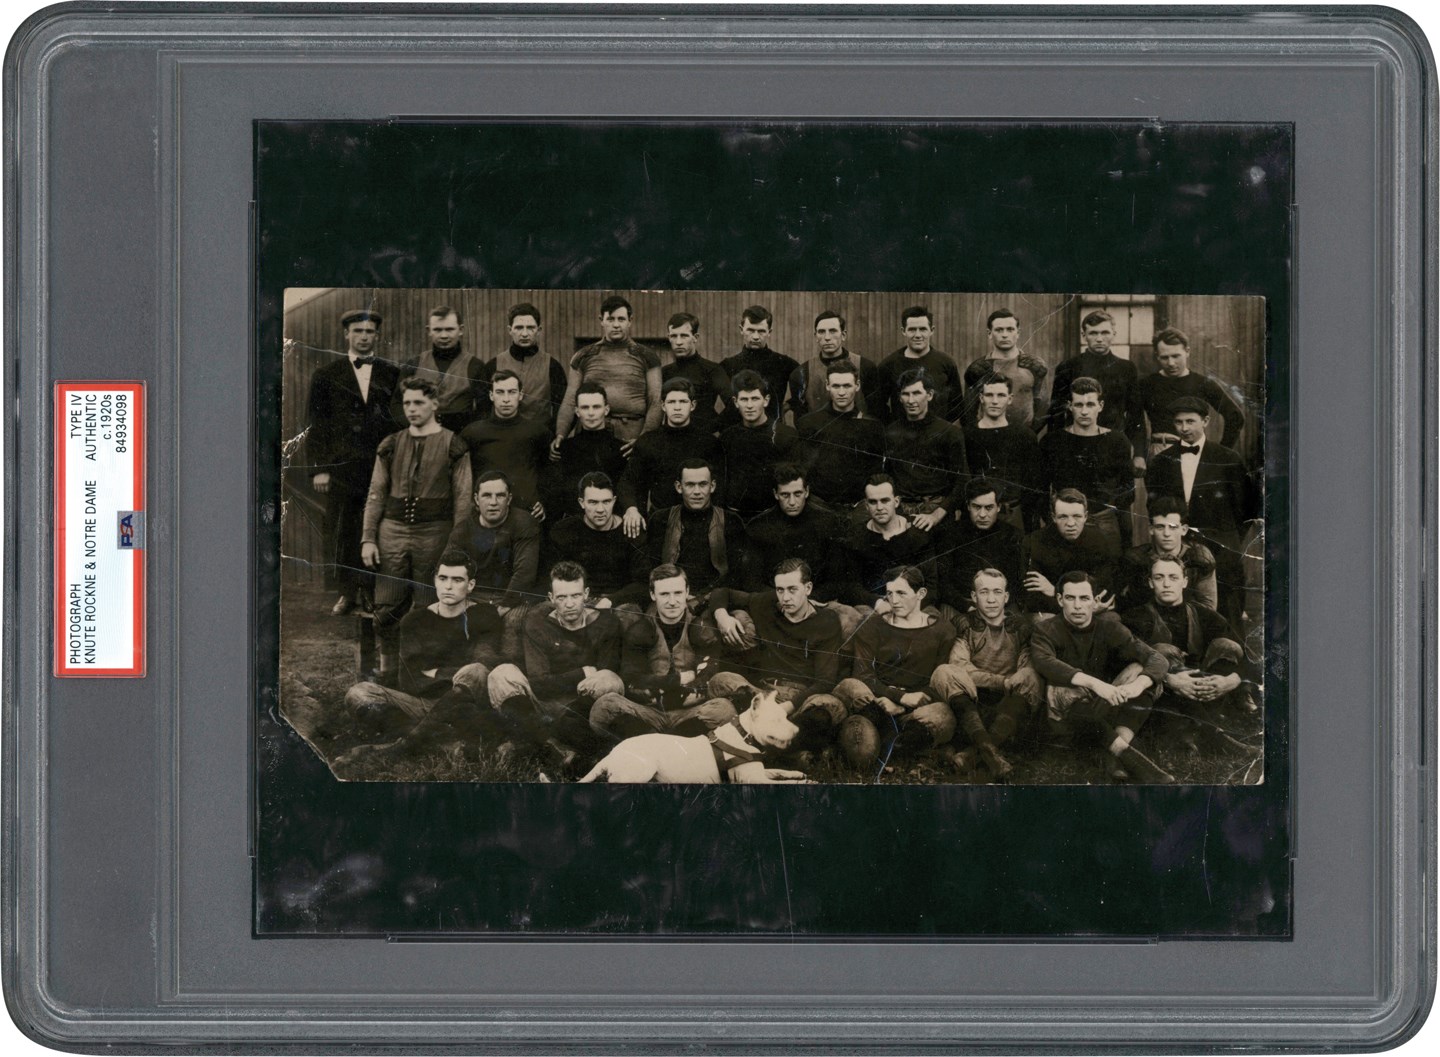 Vintage Sports Photographs - Knute Rockne and Notre Dame Fighting Irish Football Team Photograph (PSA)